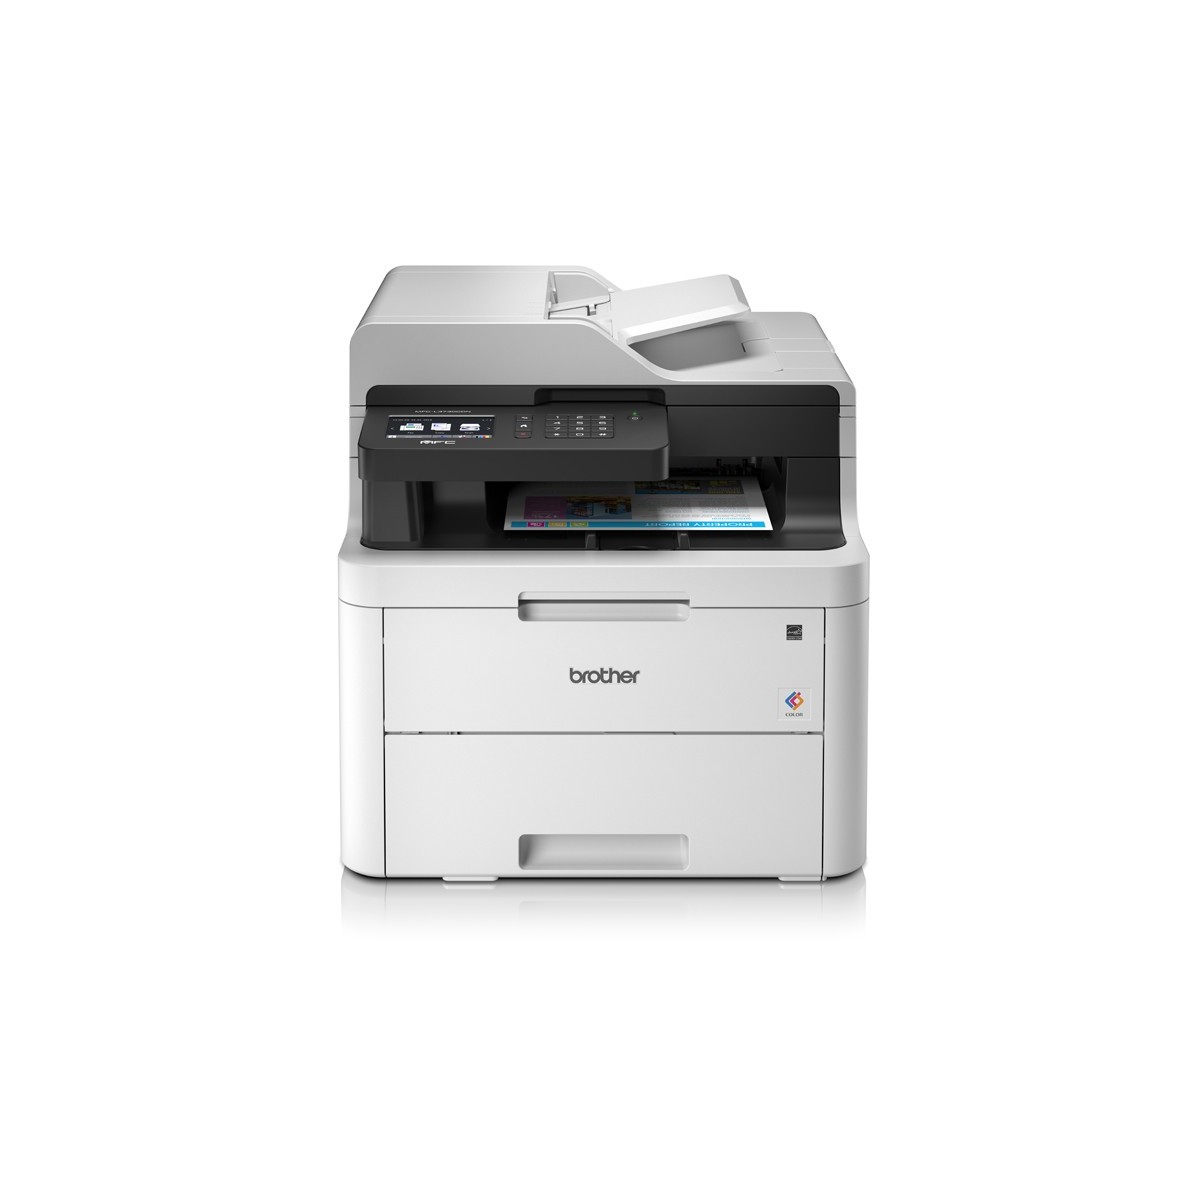 Brother MFC-L3730CDN - LED - Colour printing - 2400 x 600 DPI - Colour copying - A4 - Black - White